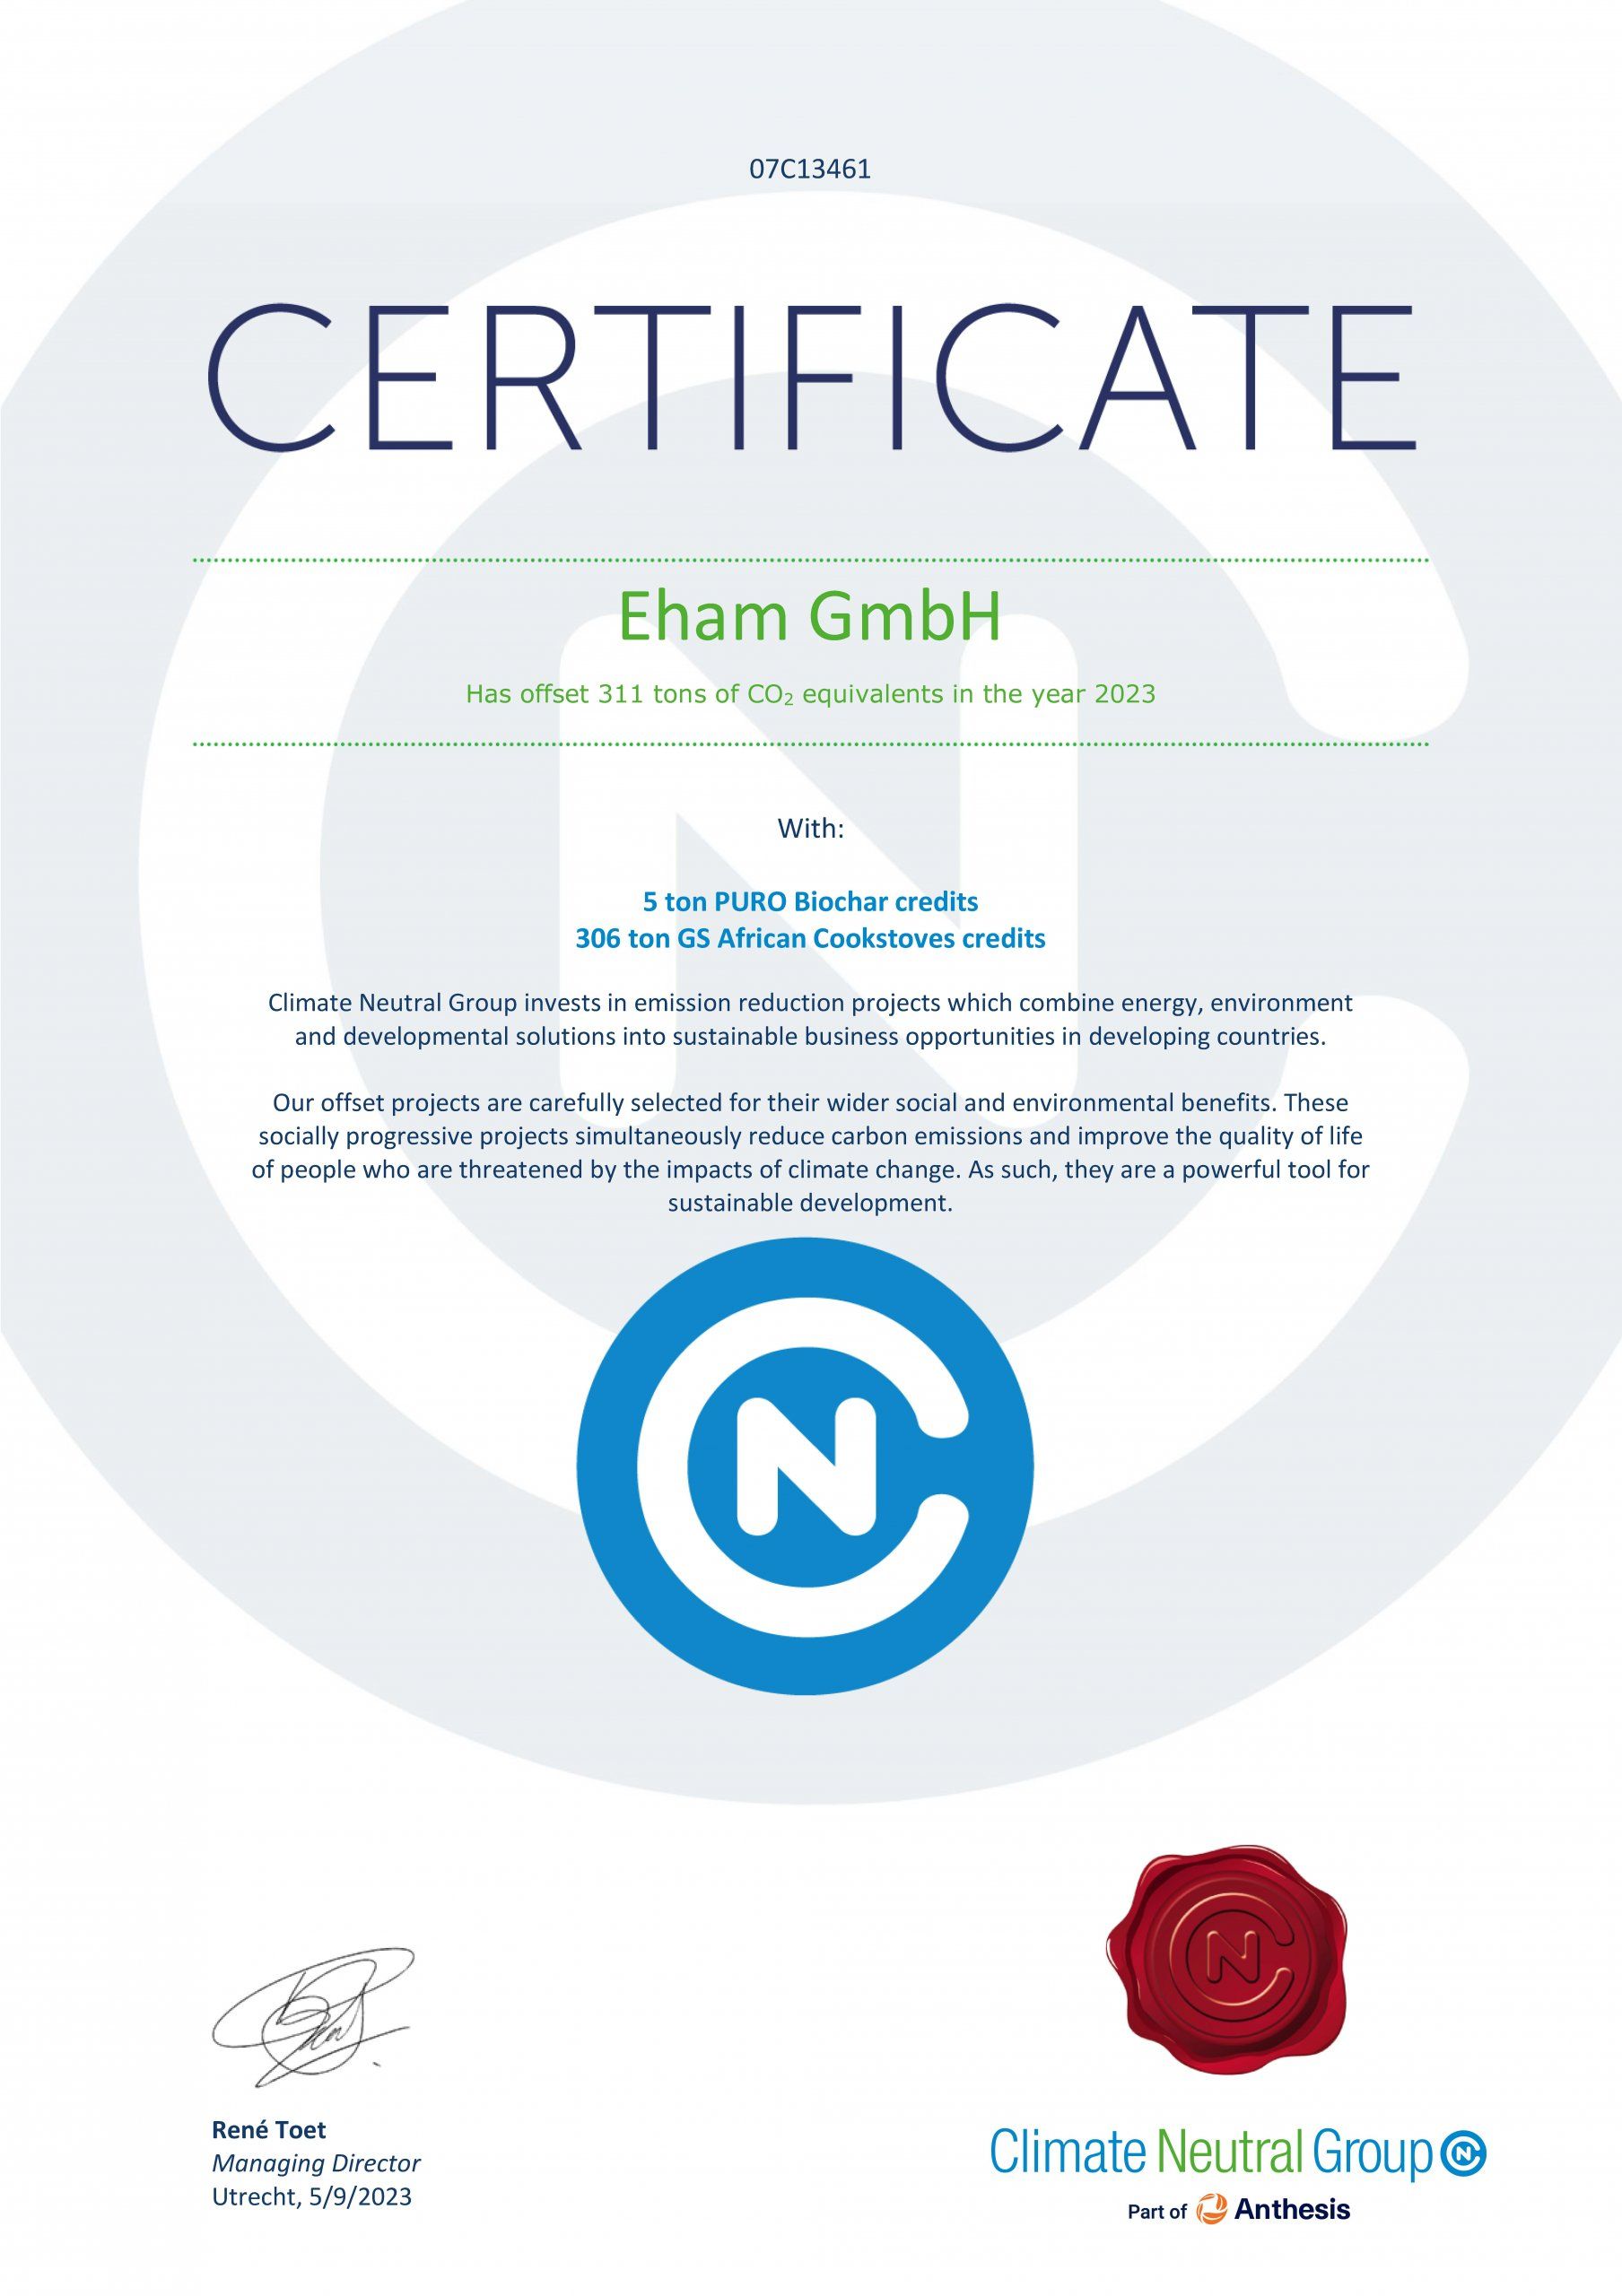 230905 Certificate Eham GmbH 2023-1